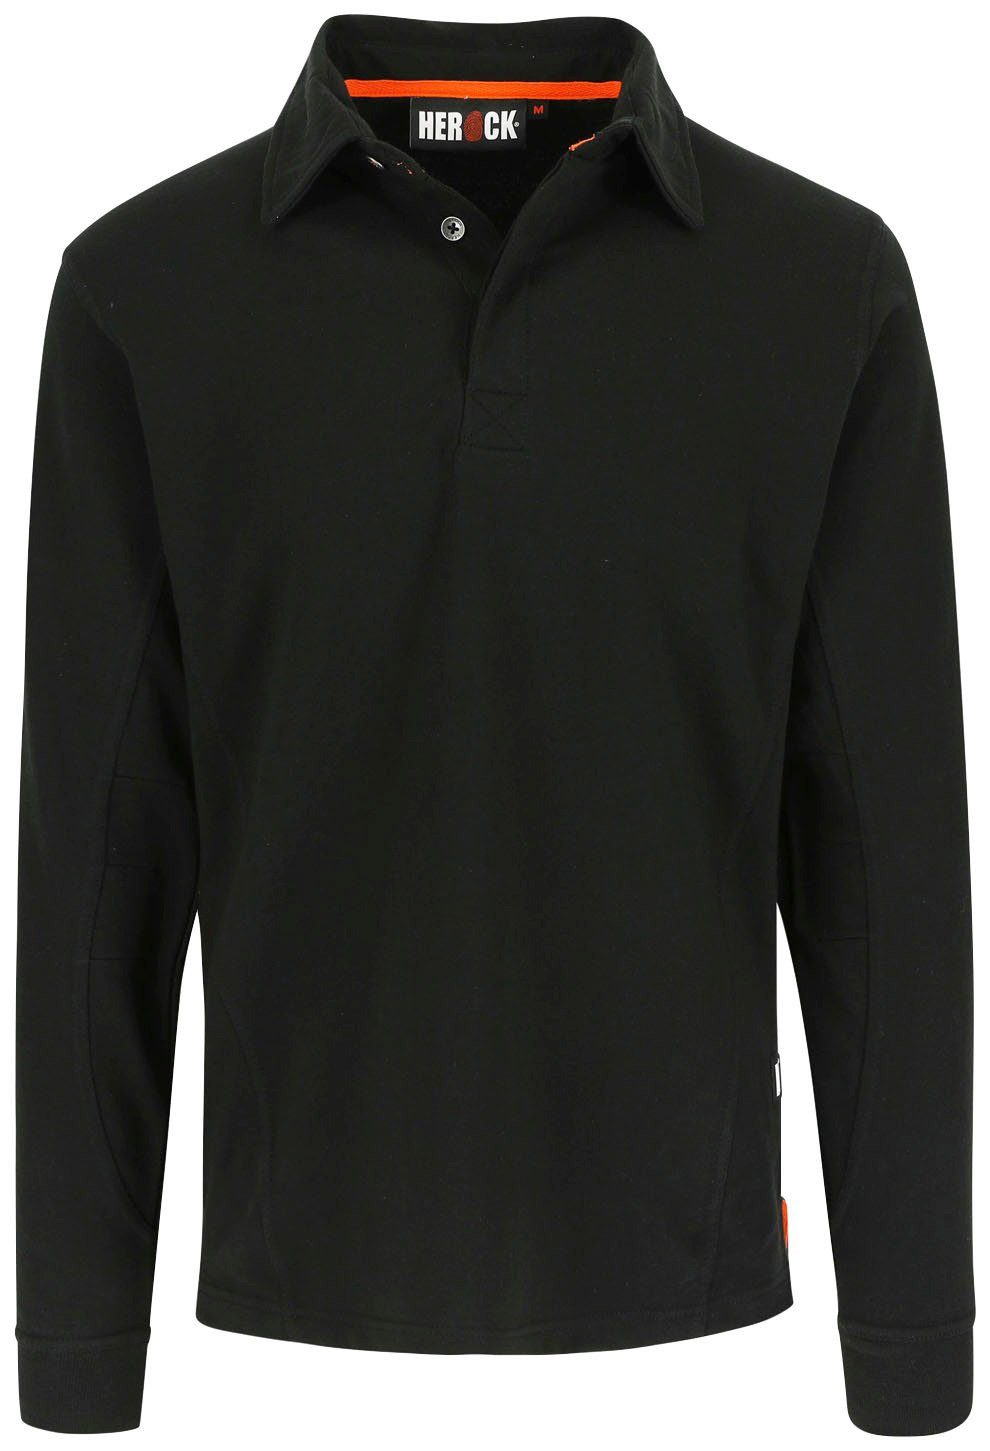 Langarm-Poloshirt Herock verschiedene figurformend, Tragegefühl, Angenehmes Farben Polo Troja Langärmlig schwarz leicht